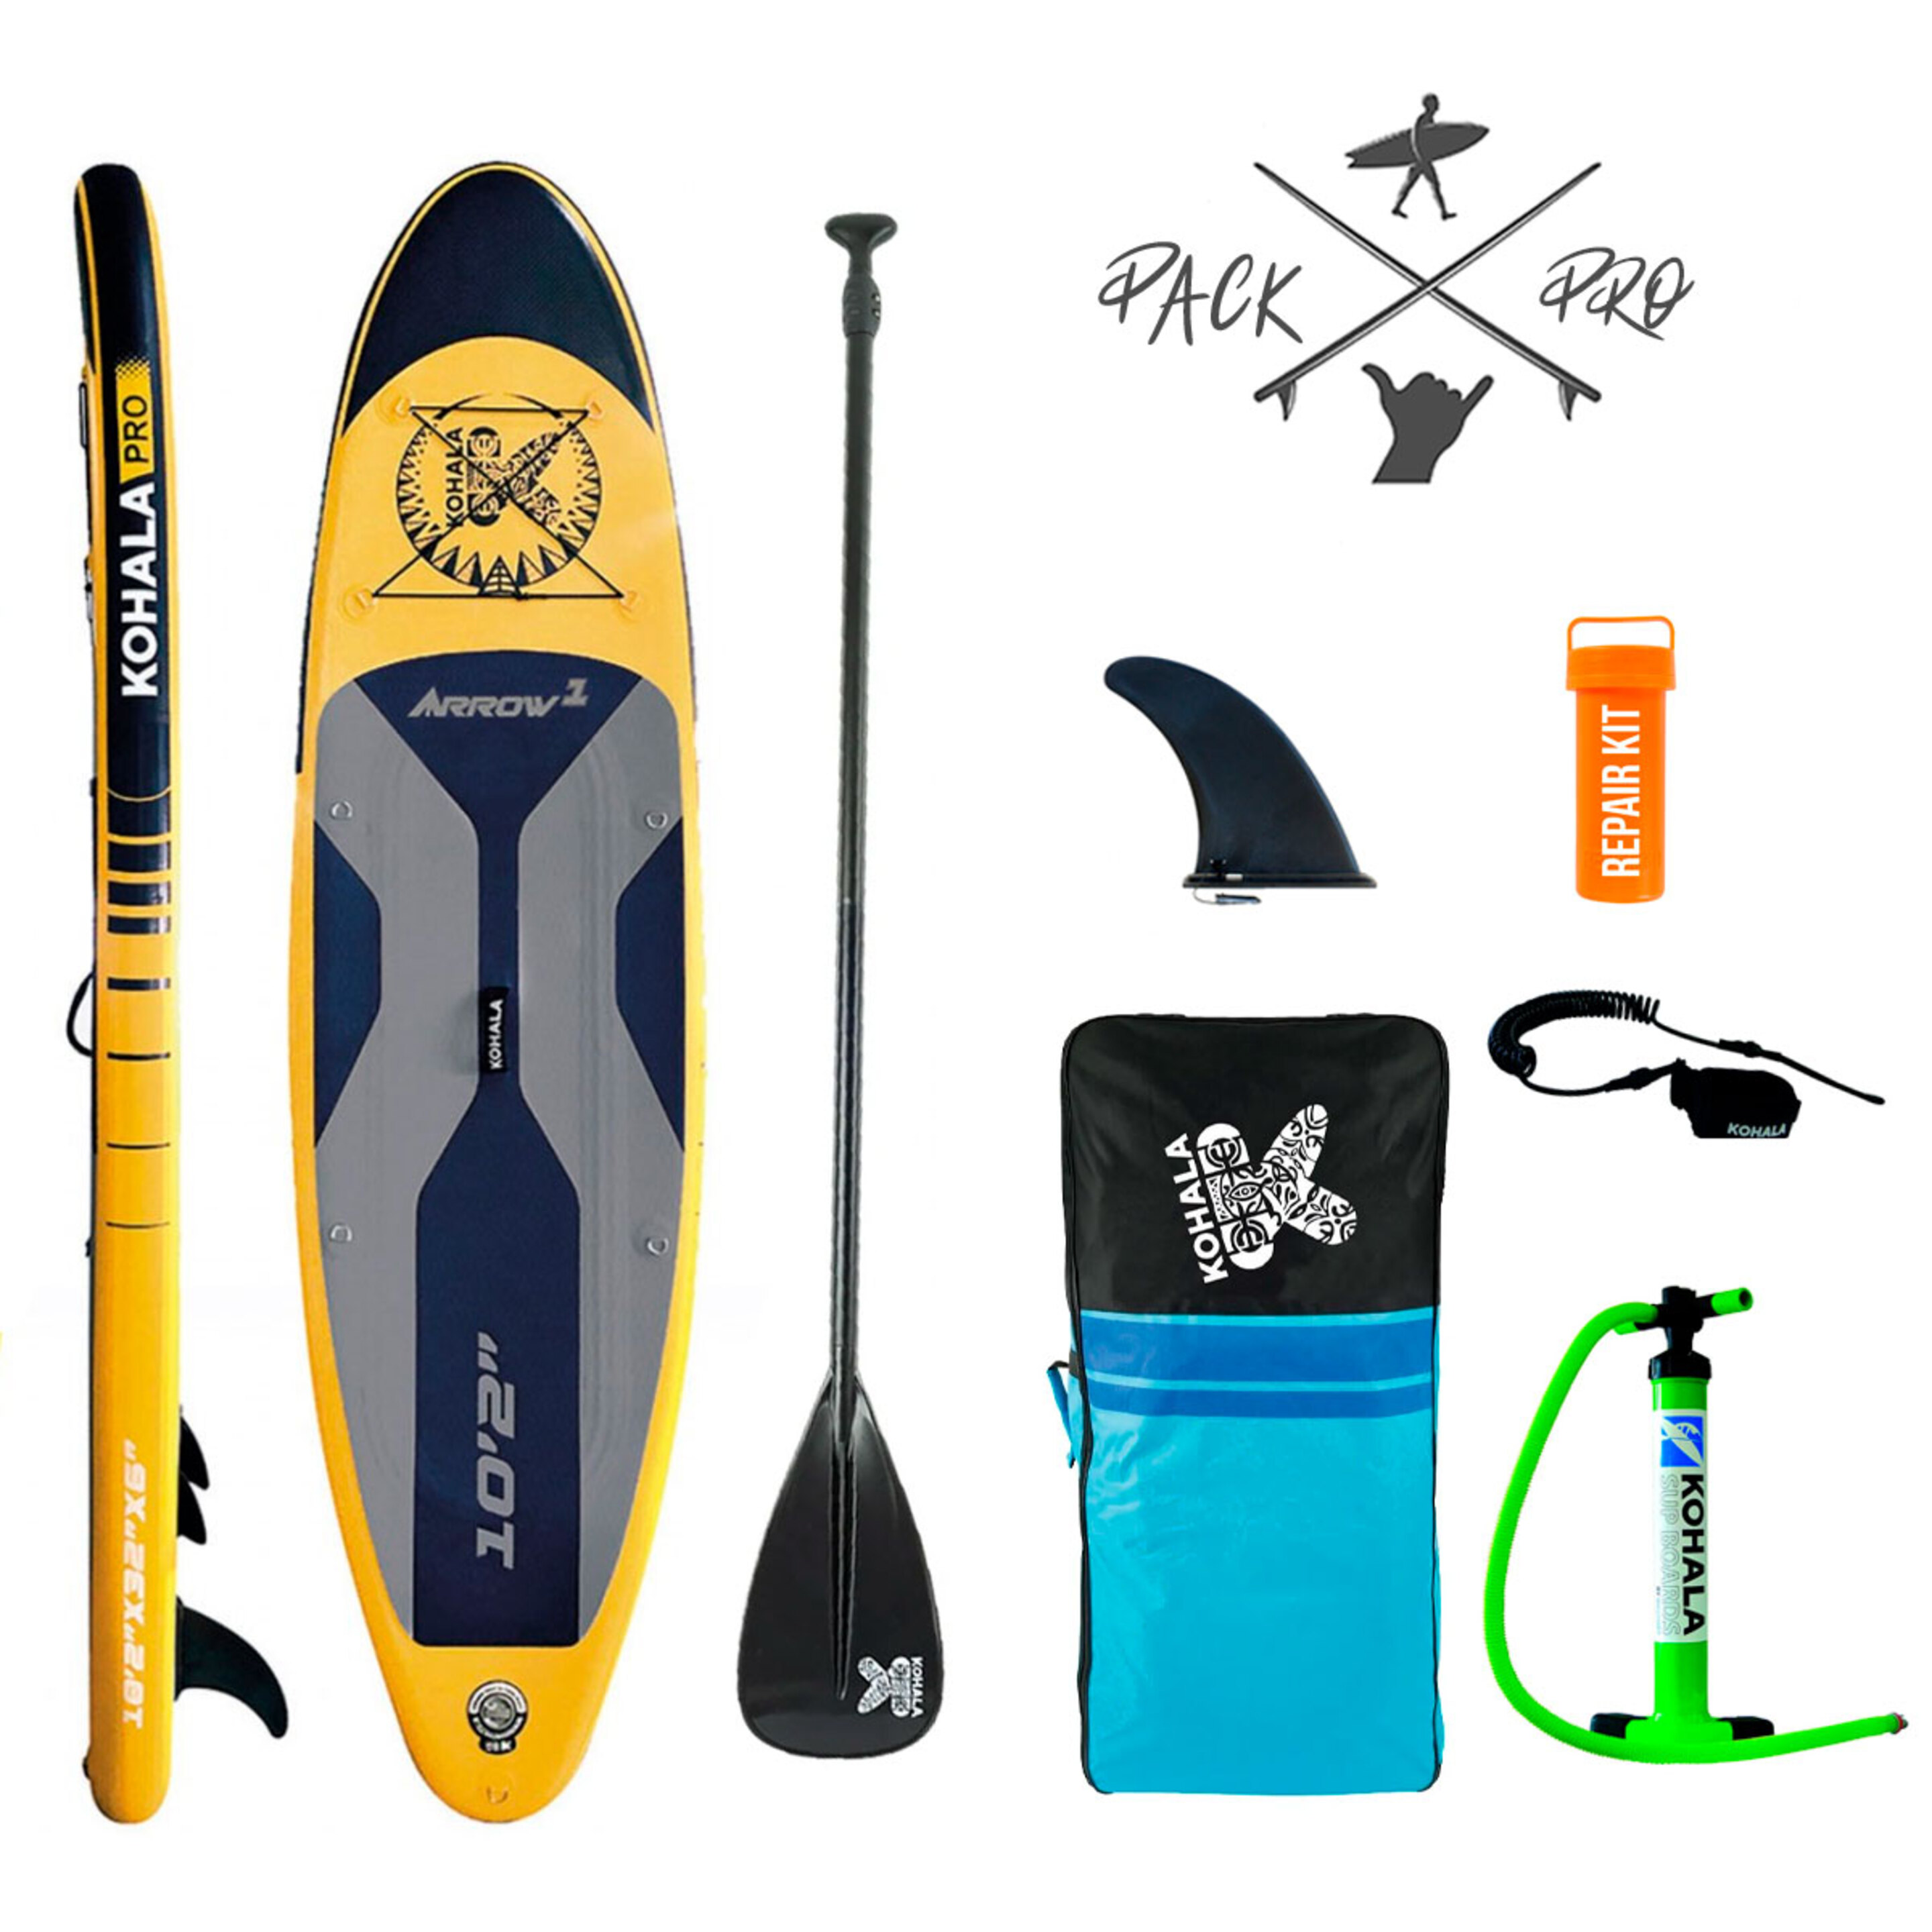 Prancha Insuflável Kohala Arrow 1 10,2" - Amarelo - Prancha Paddle Surf | Sport Zone MKP